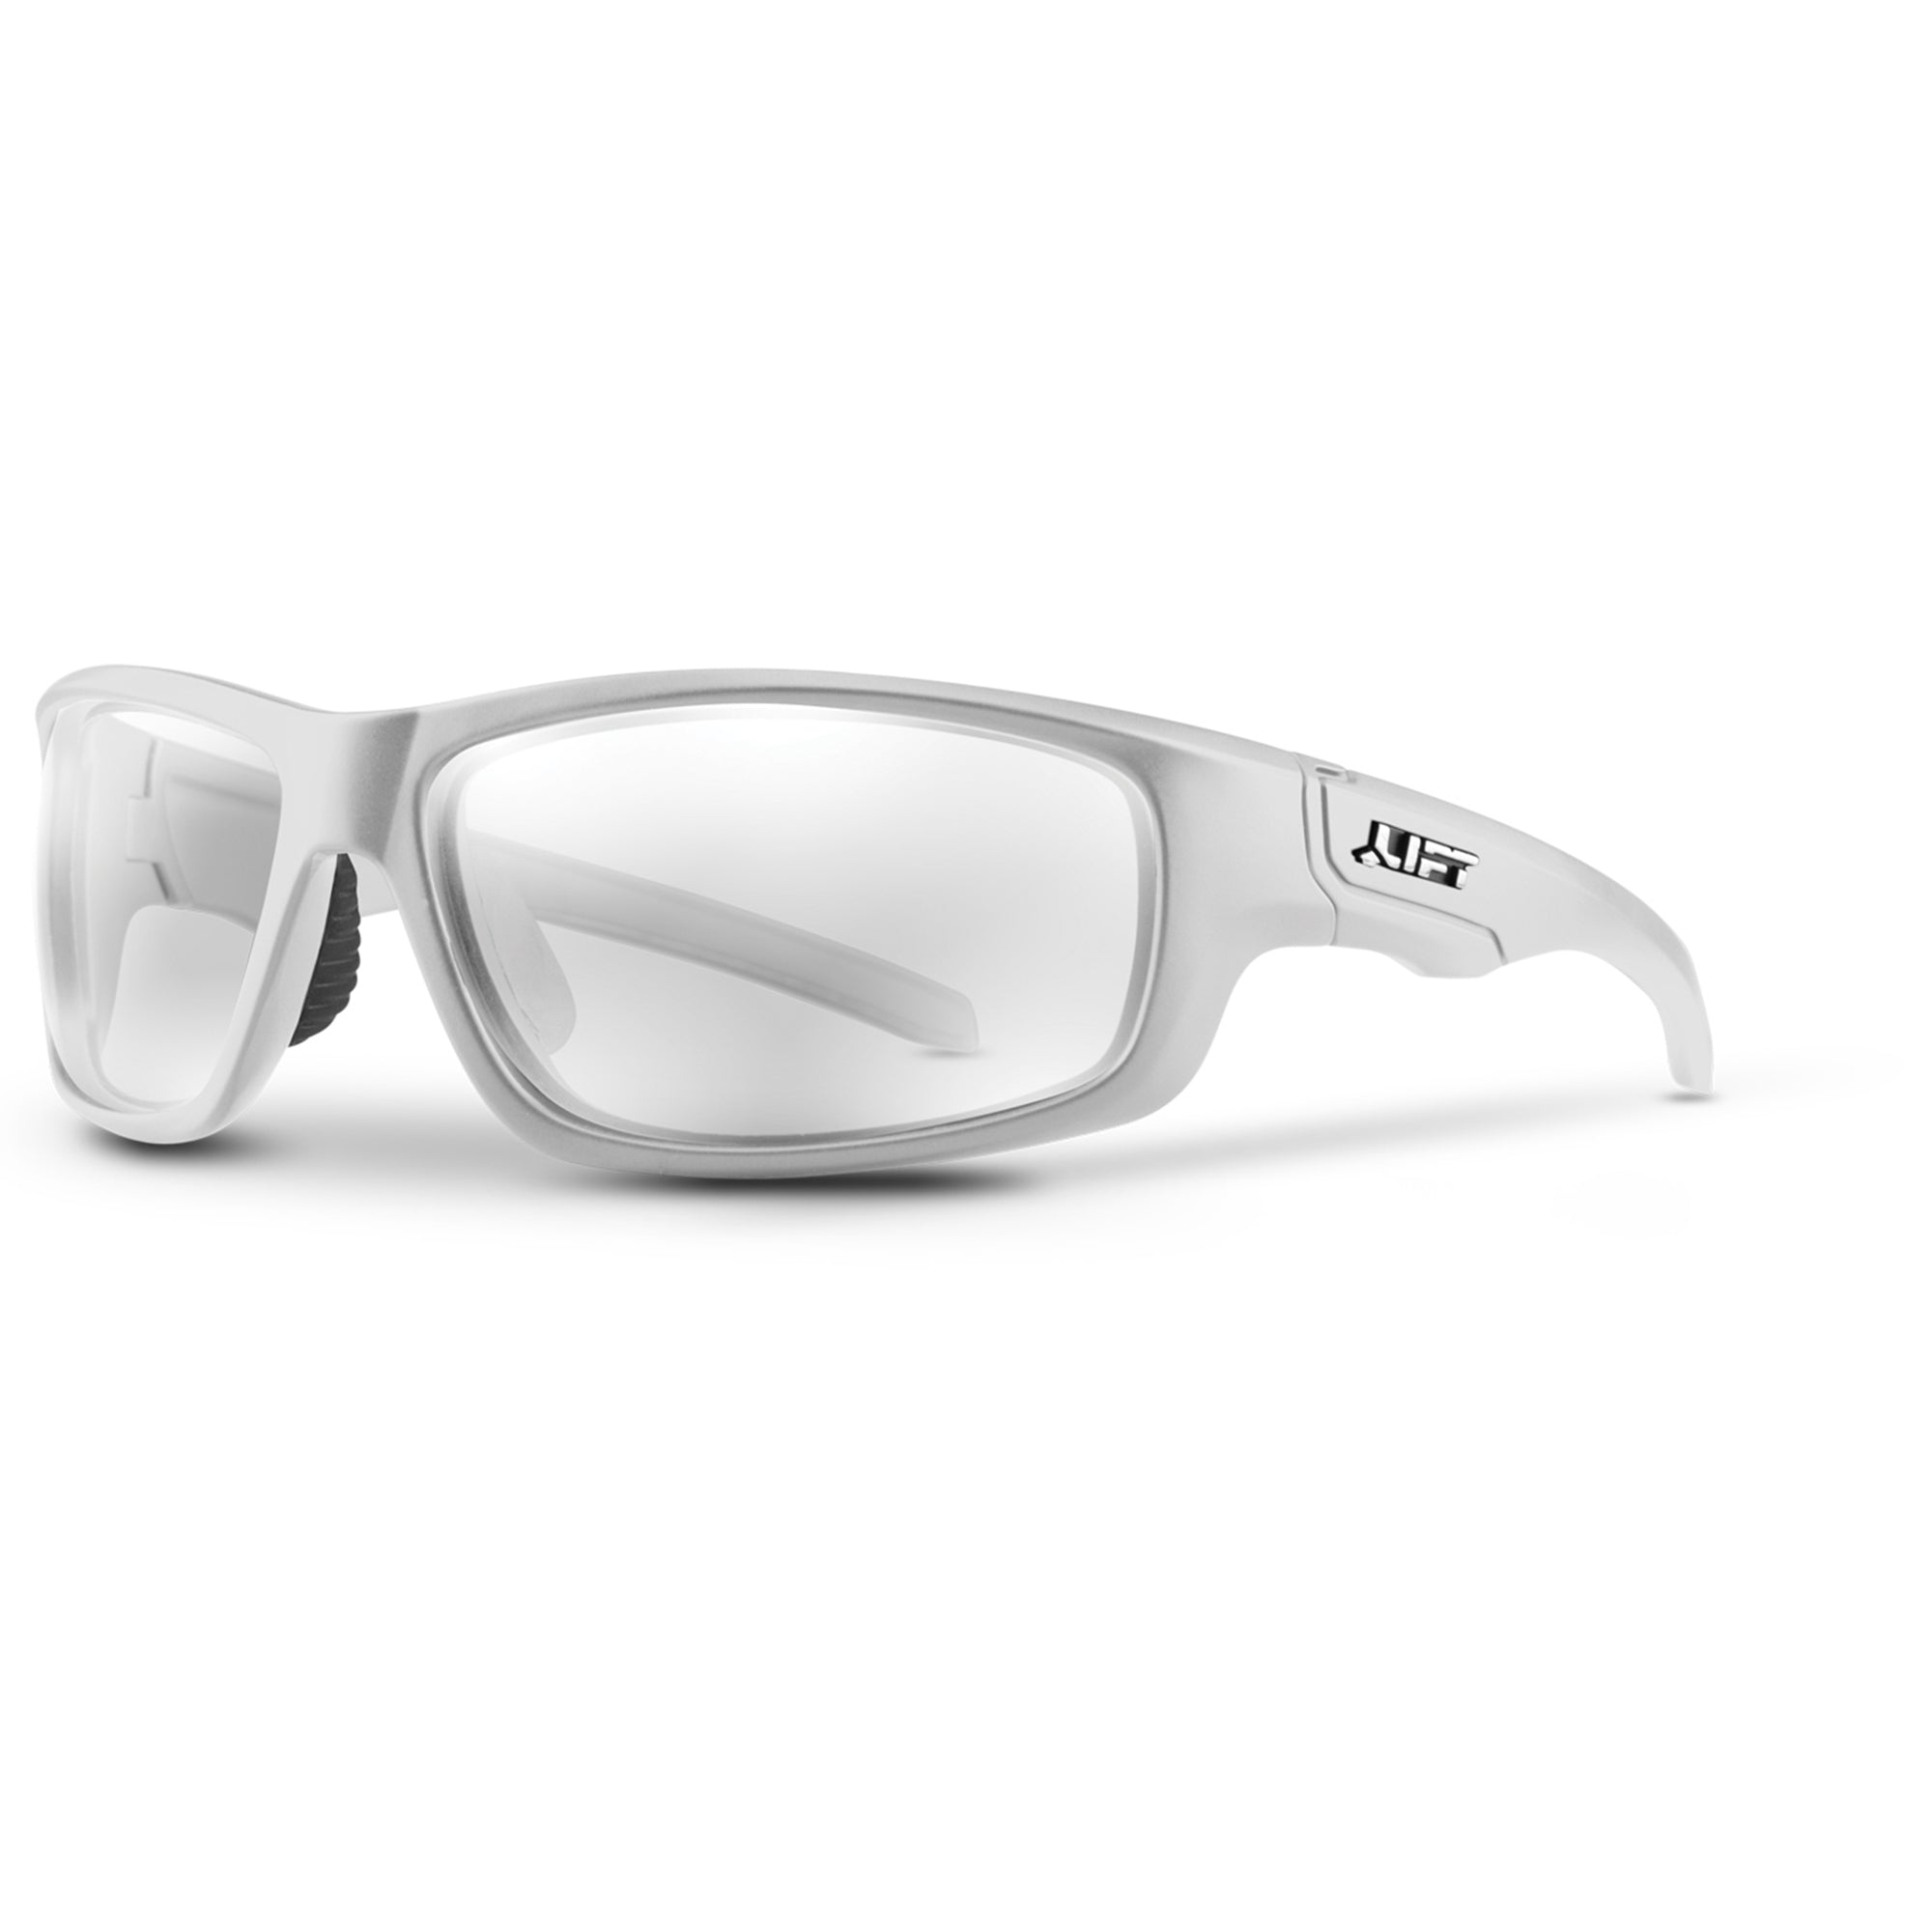 Sonic Safety Glasses - White